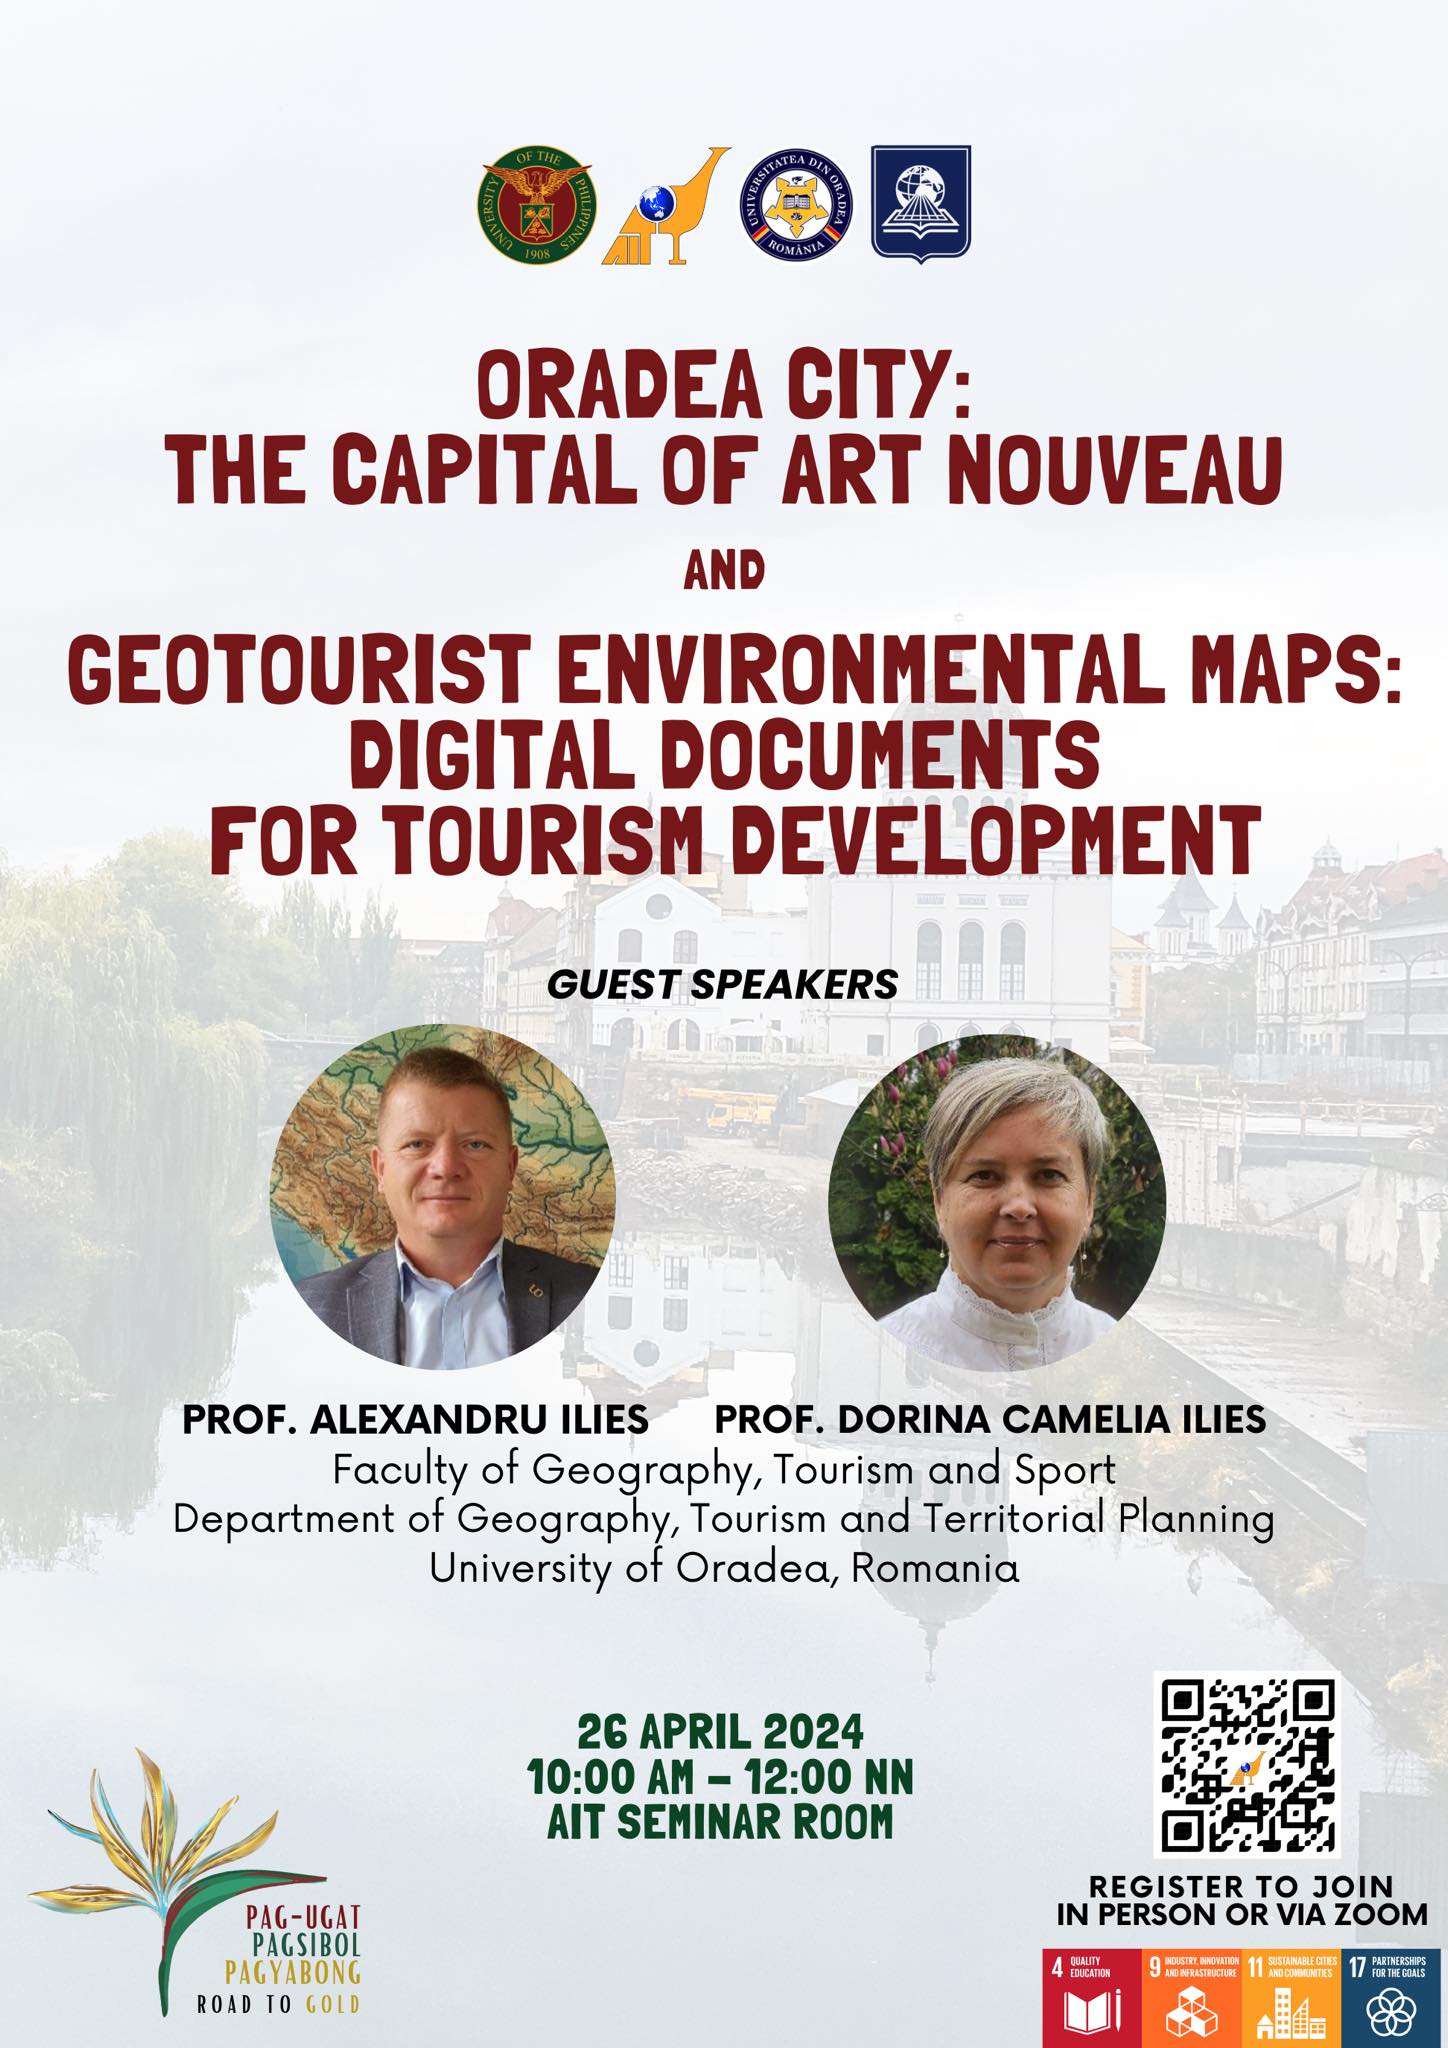 Oradea City: The Capital of Art Nouveau and Geotourist Environmental Maps: Digital Documents for Tourism Development